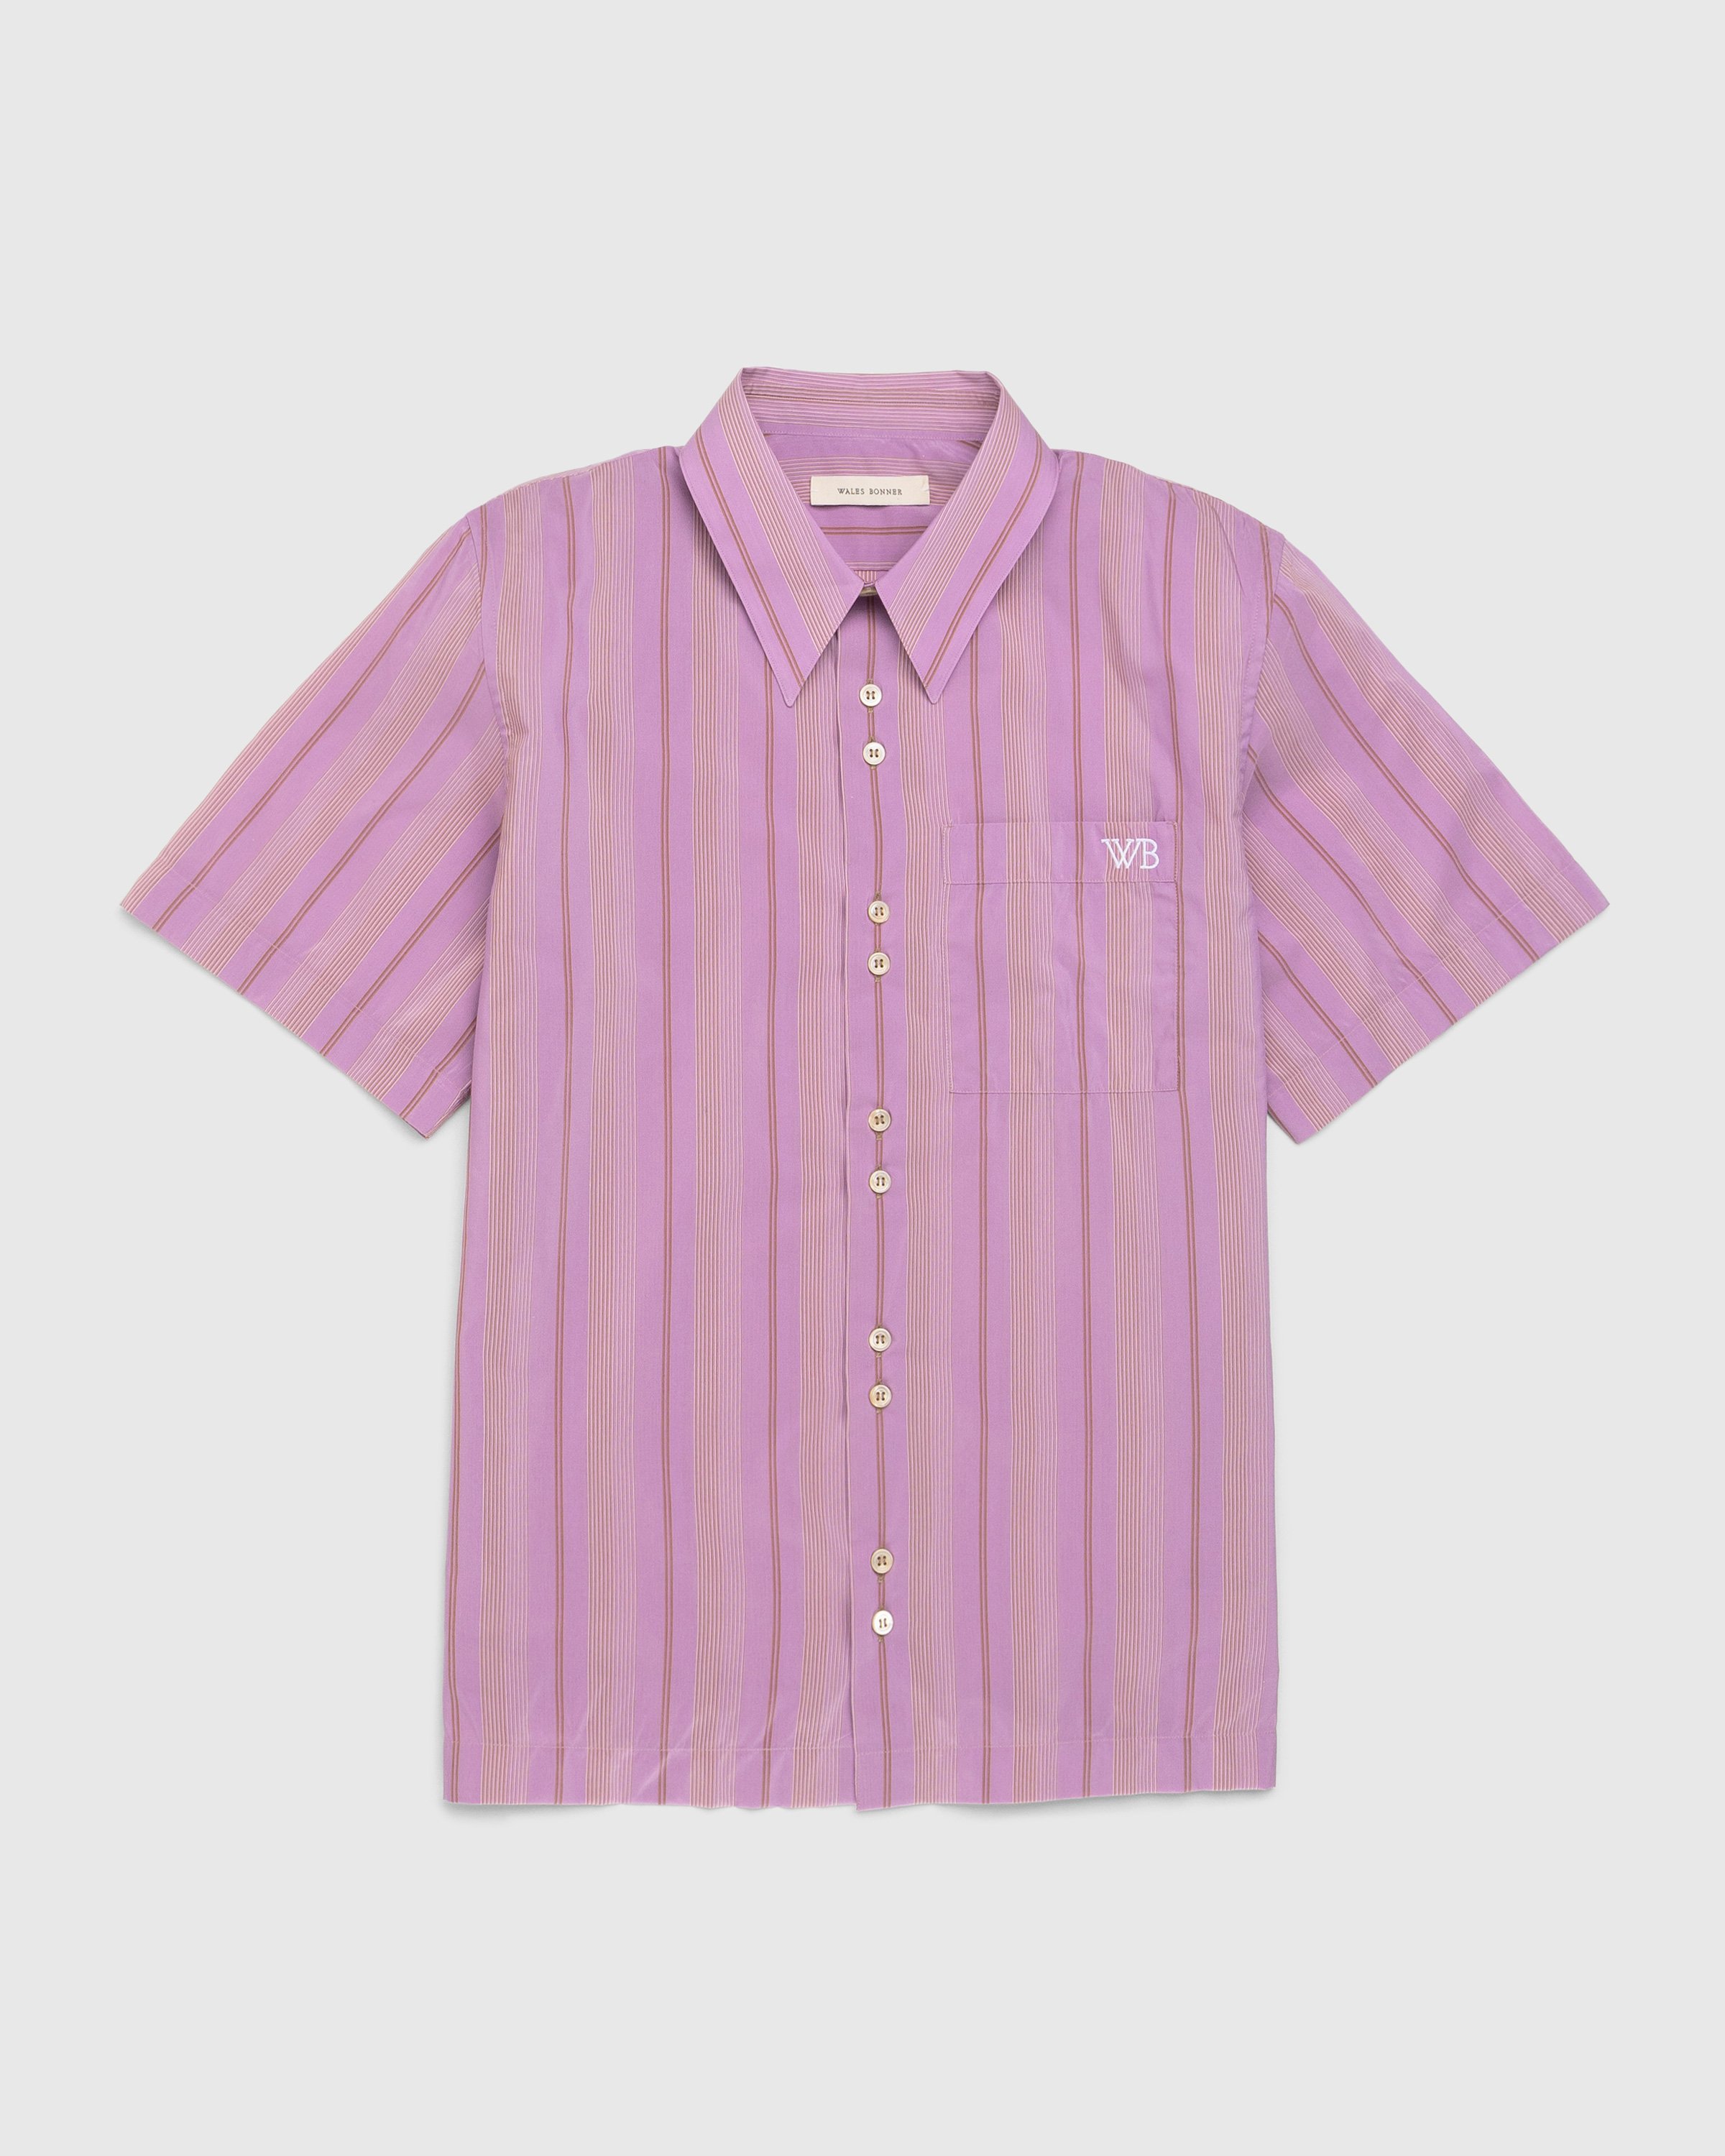 Wales Bonner - Rhythm Striped Shirt Pink - Clothing - Pink - Image 1